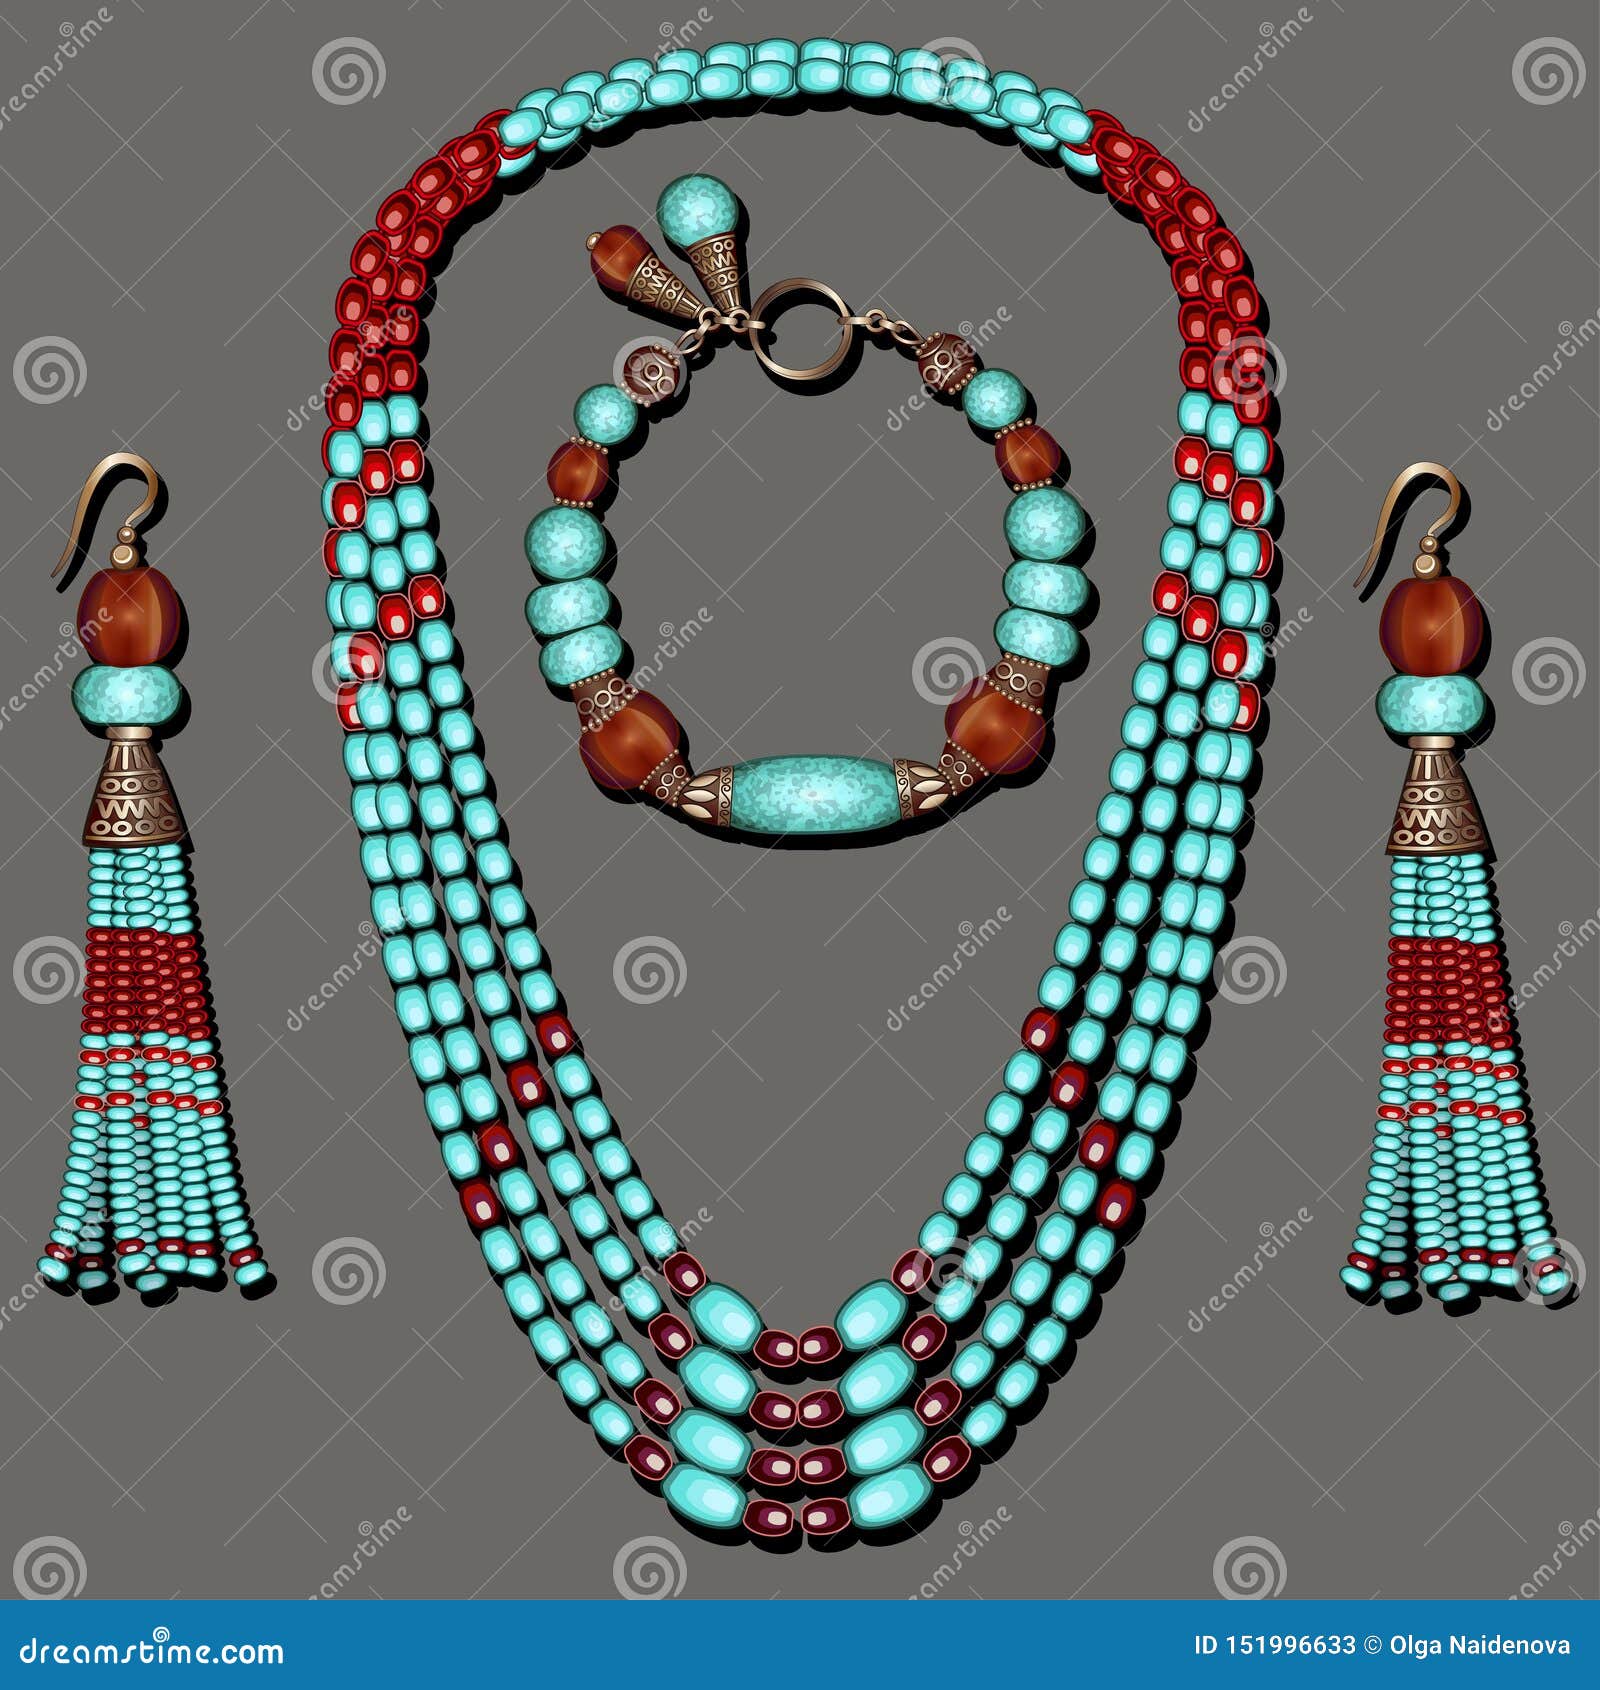 Pendant and bead earrings